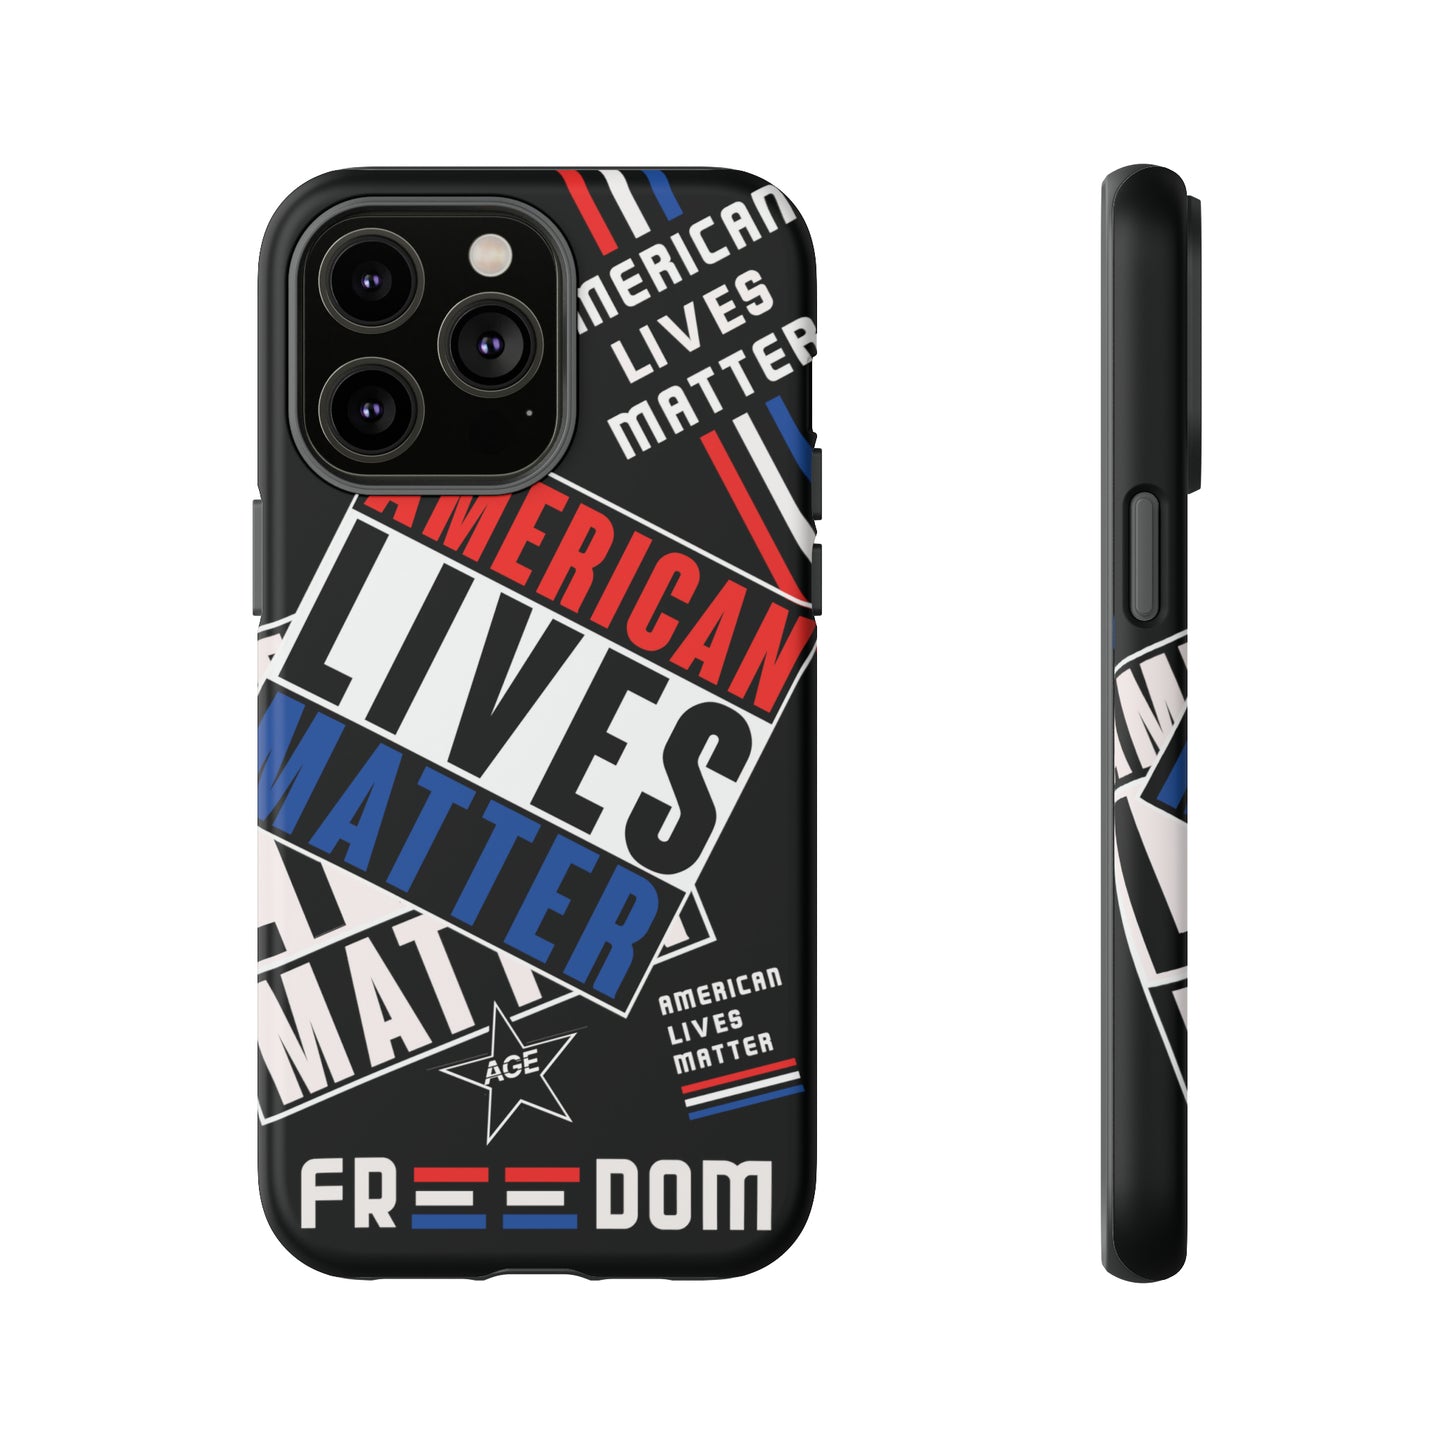 American Lives Matter Graffiti Phone Case